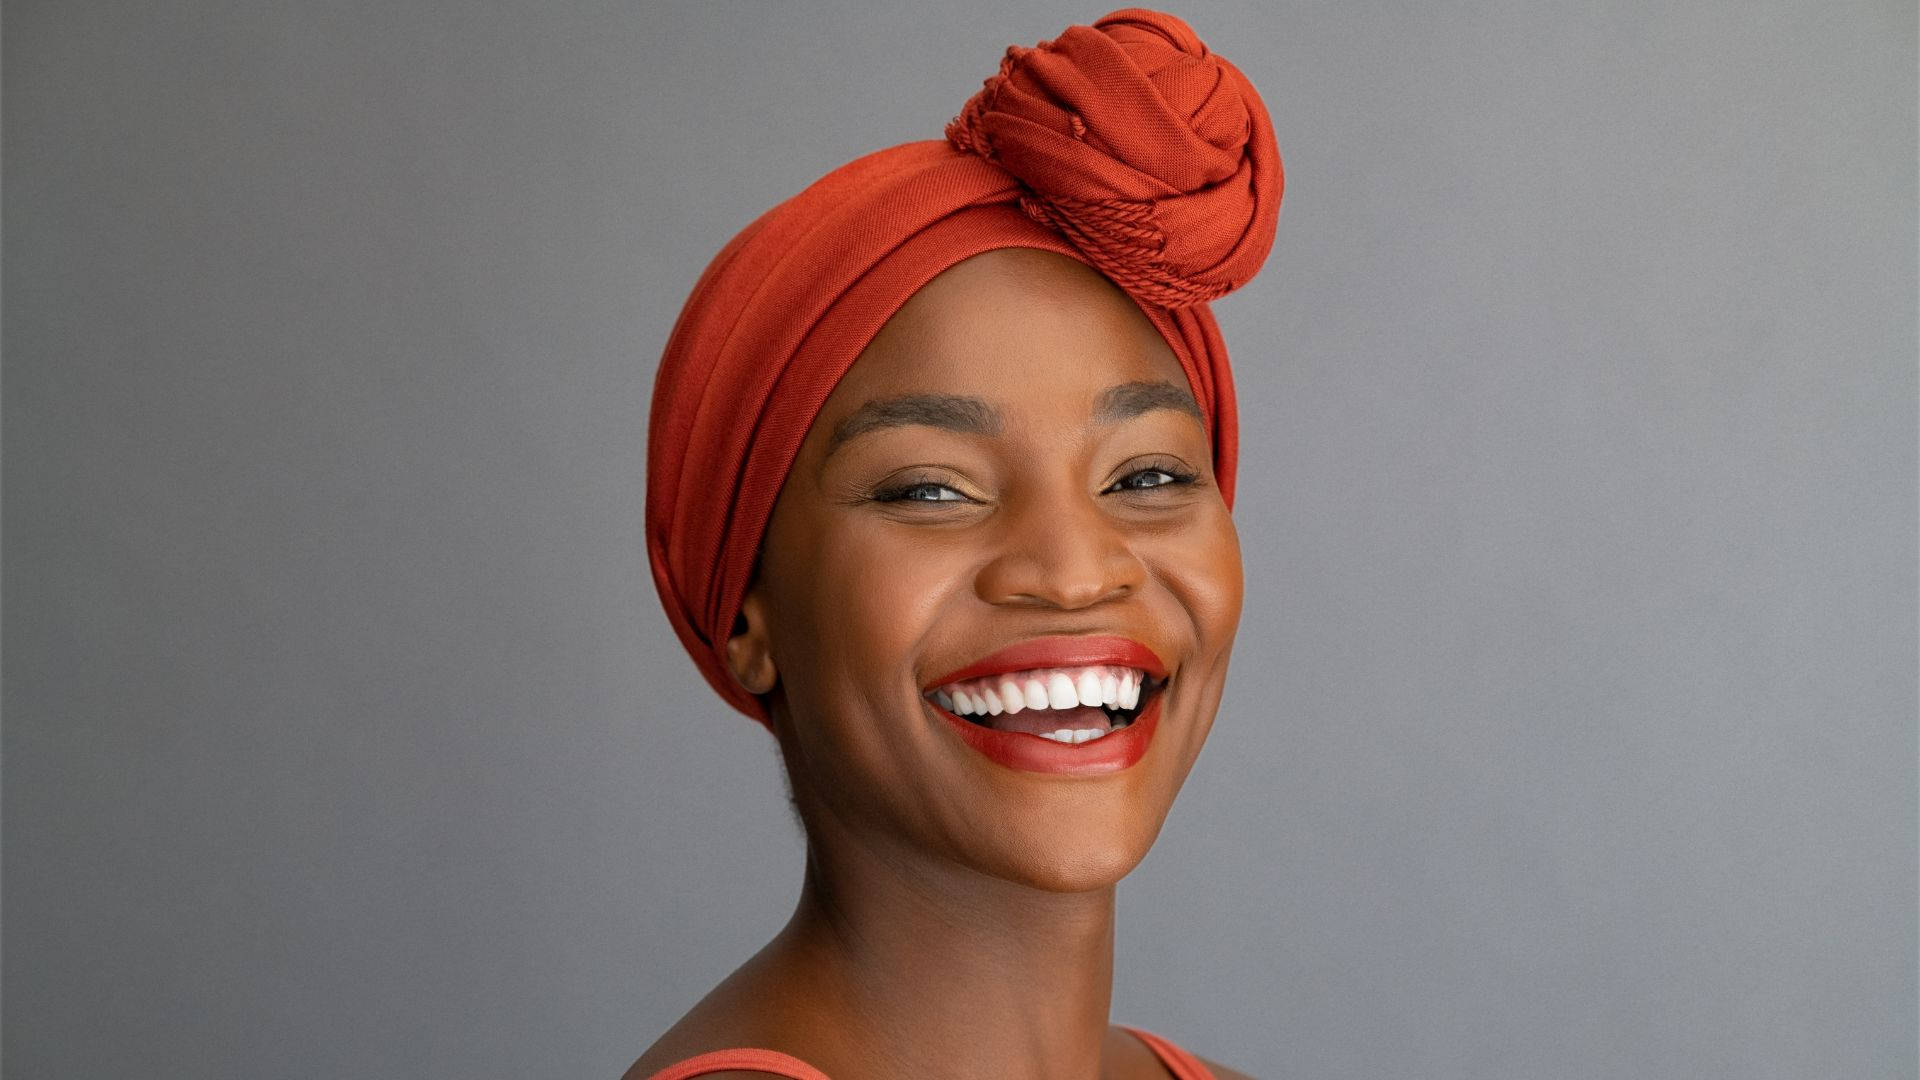 African Woman Wearing Orange Headscarf Picture